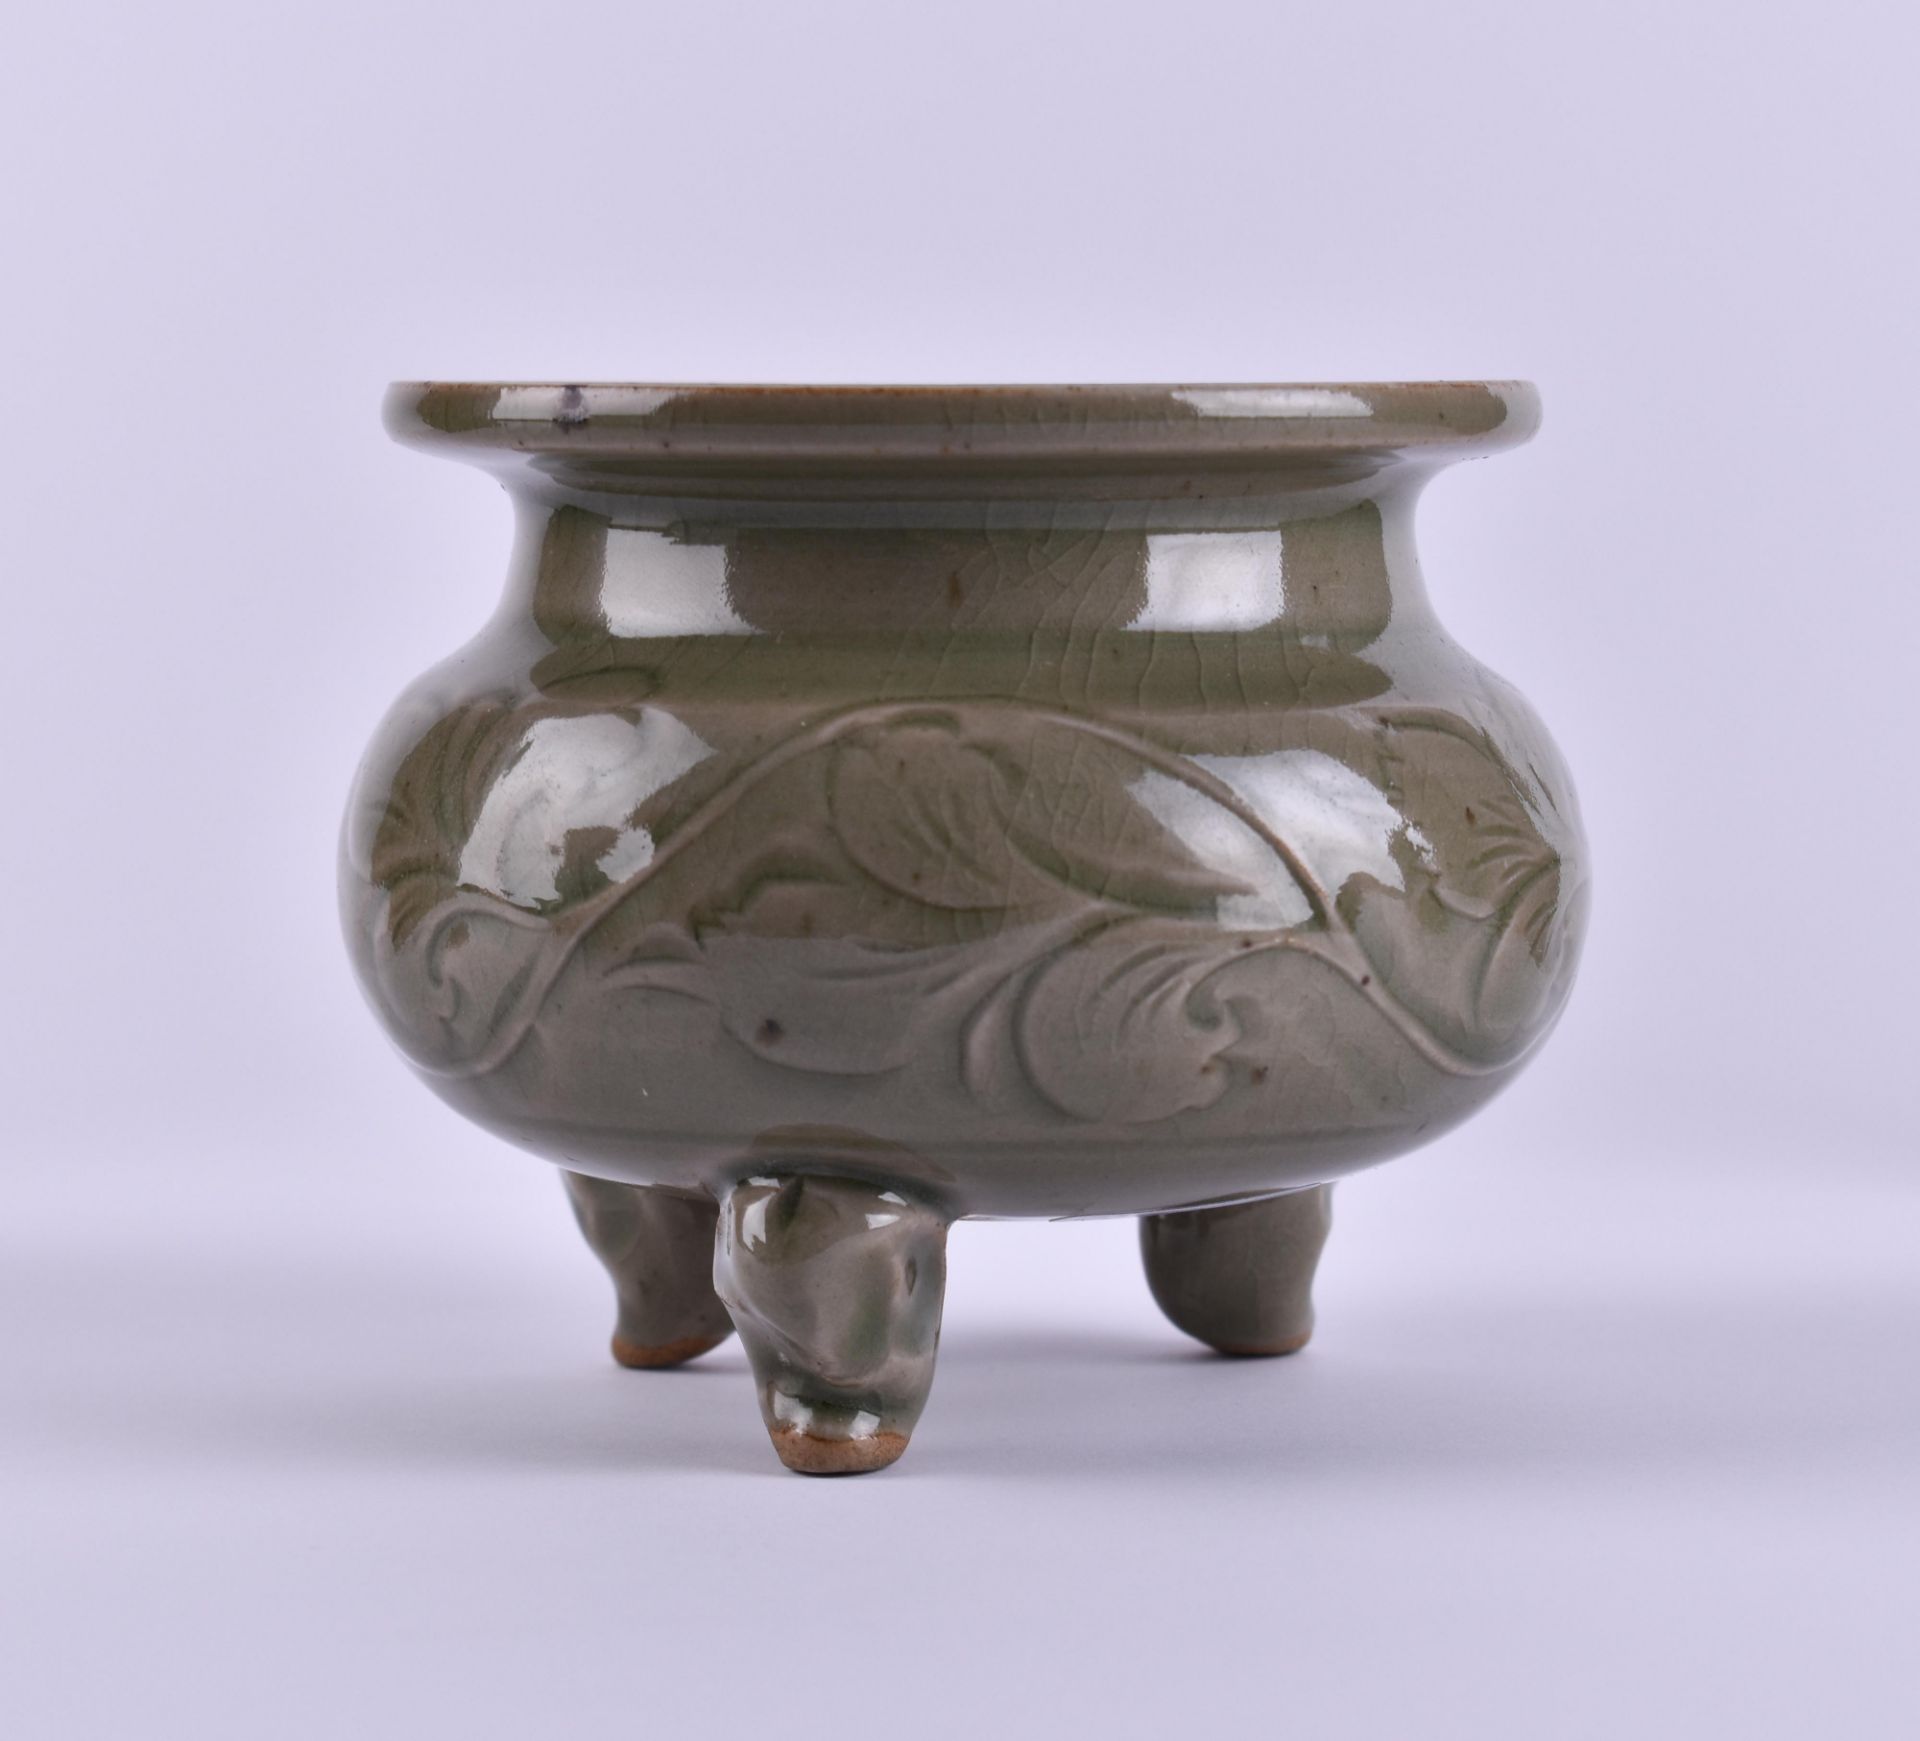  Incense burner China Ming period - Image 2 of 5